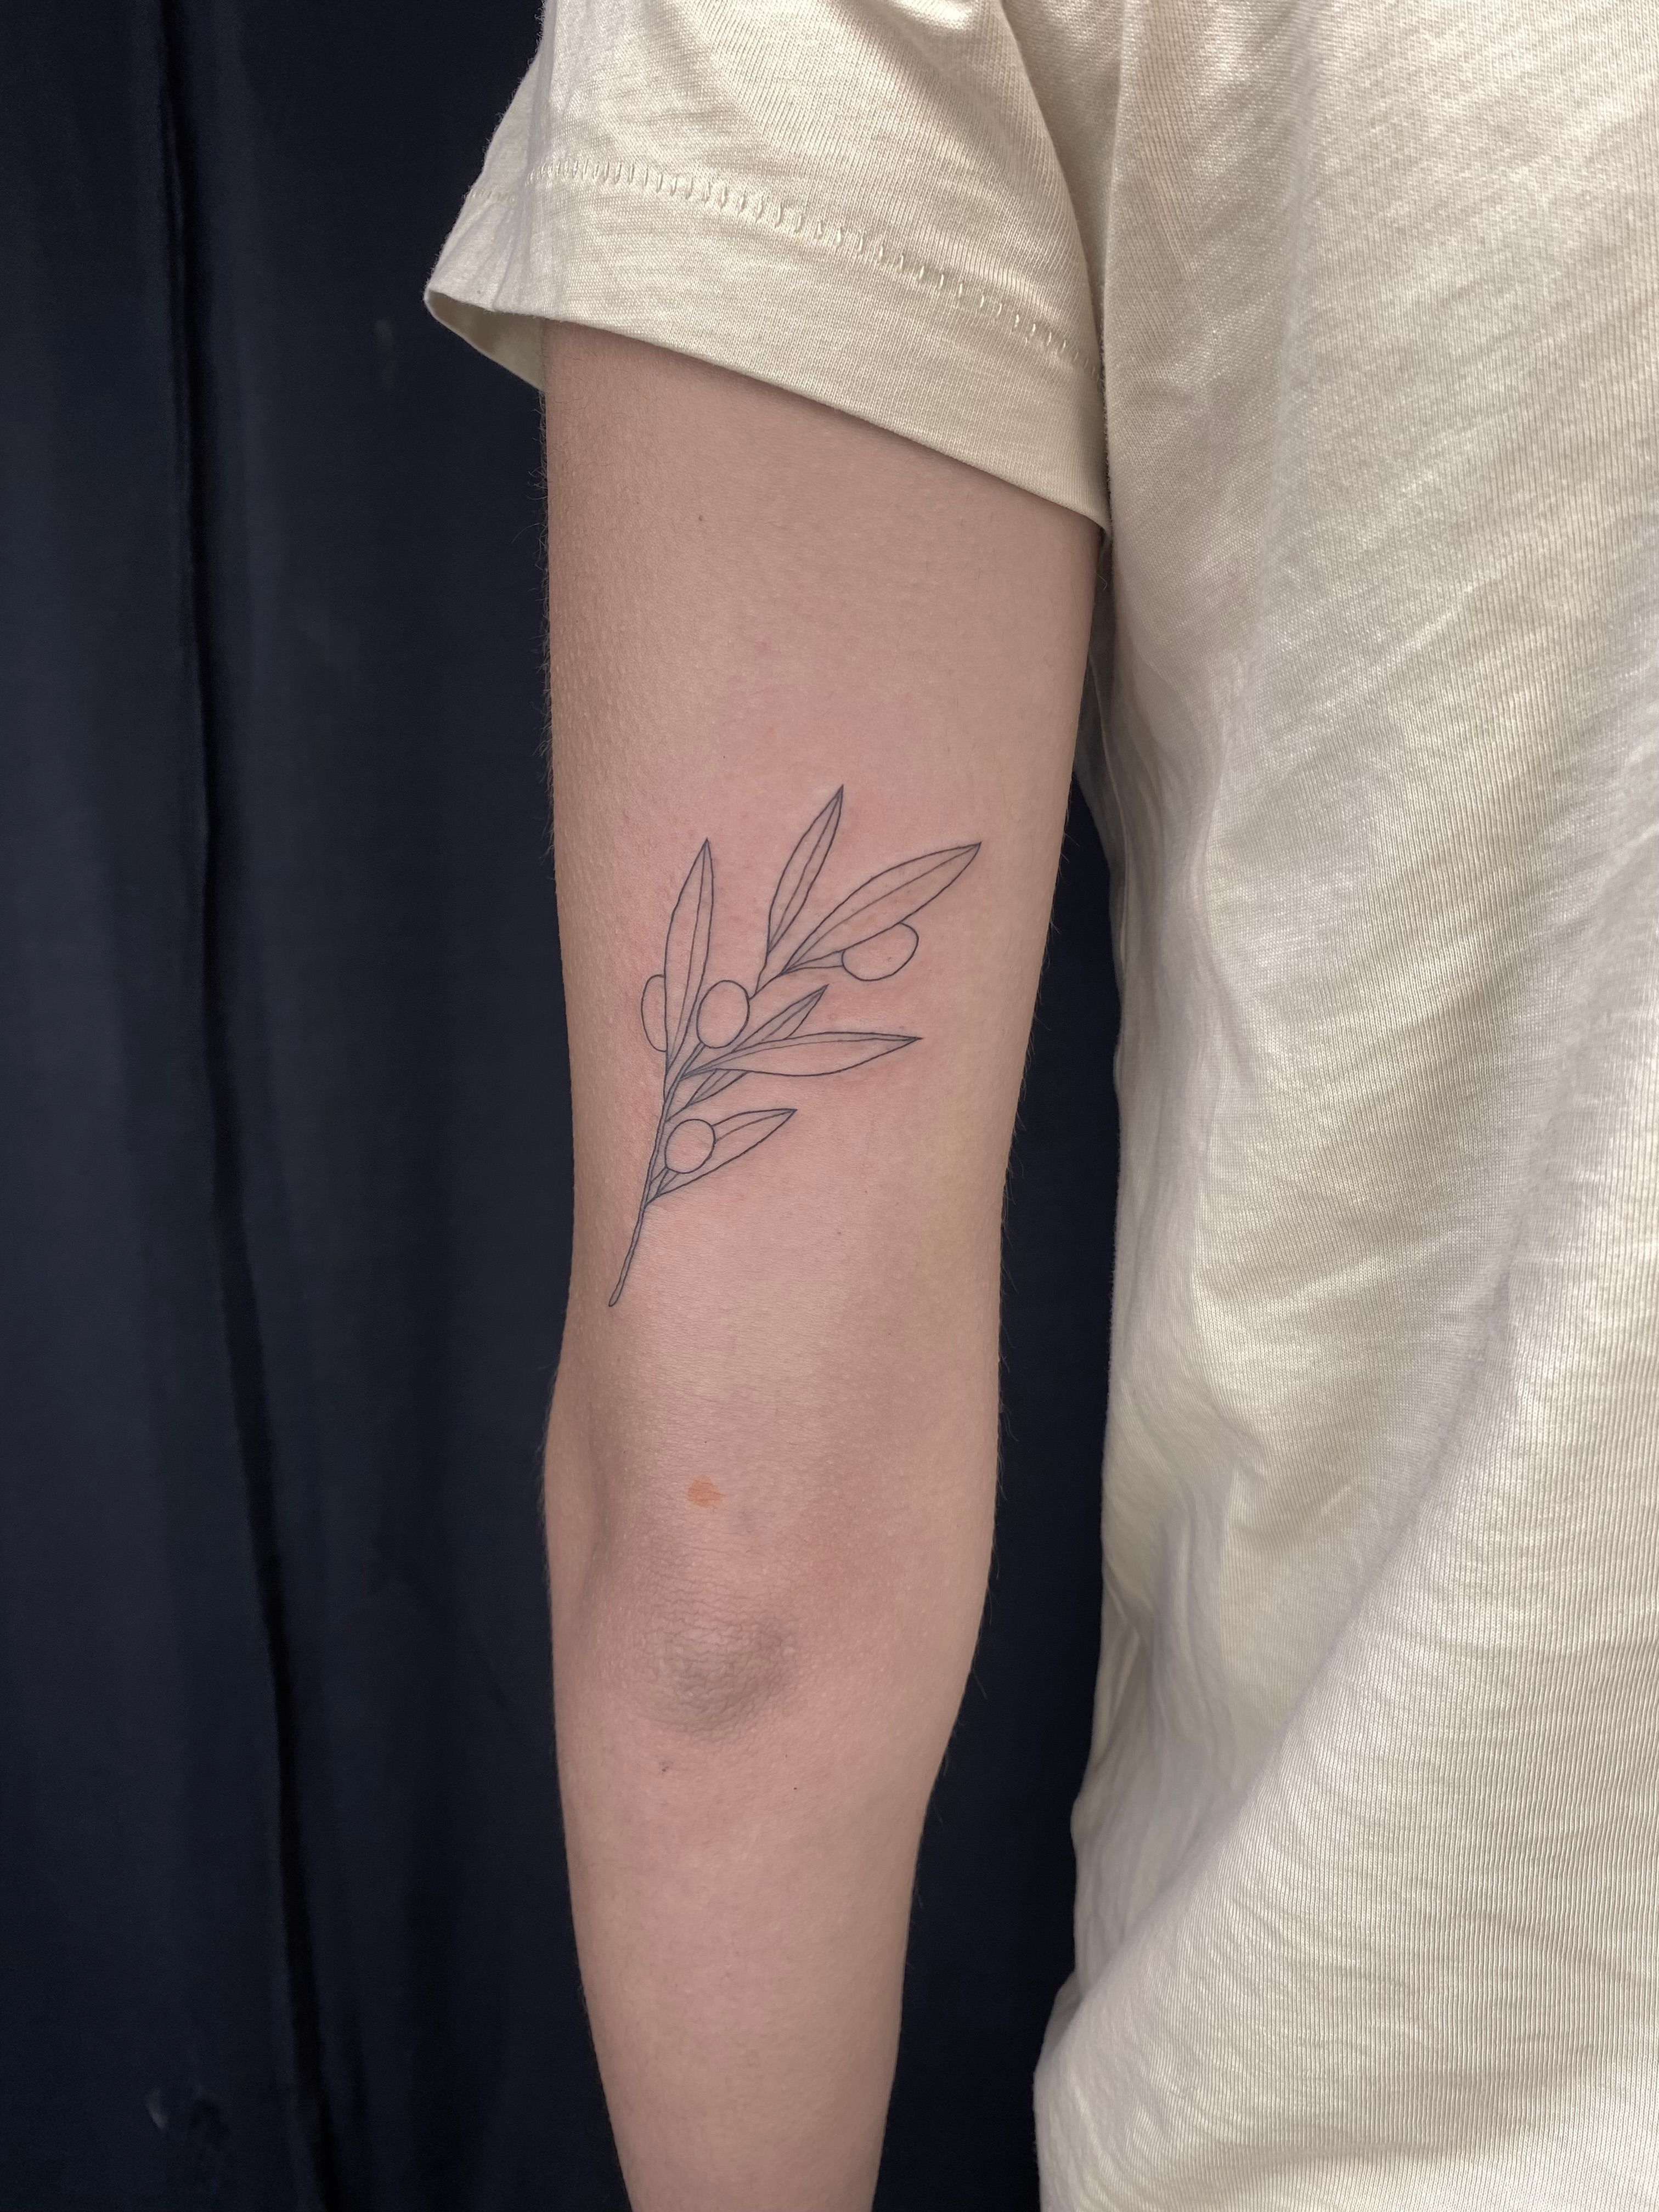 Heart Leaves Swirls Outline Temporary Tattoo Decorative Feminine Dainty  Love Wrist Tattoo - Etsy